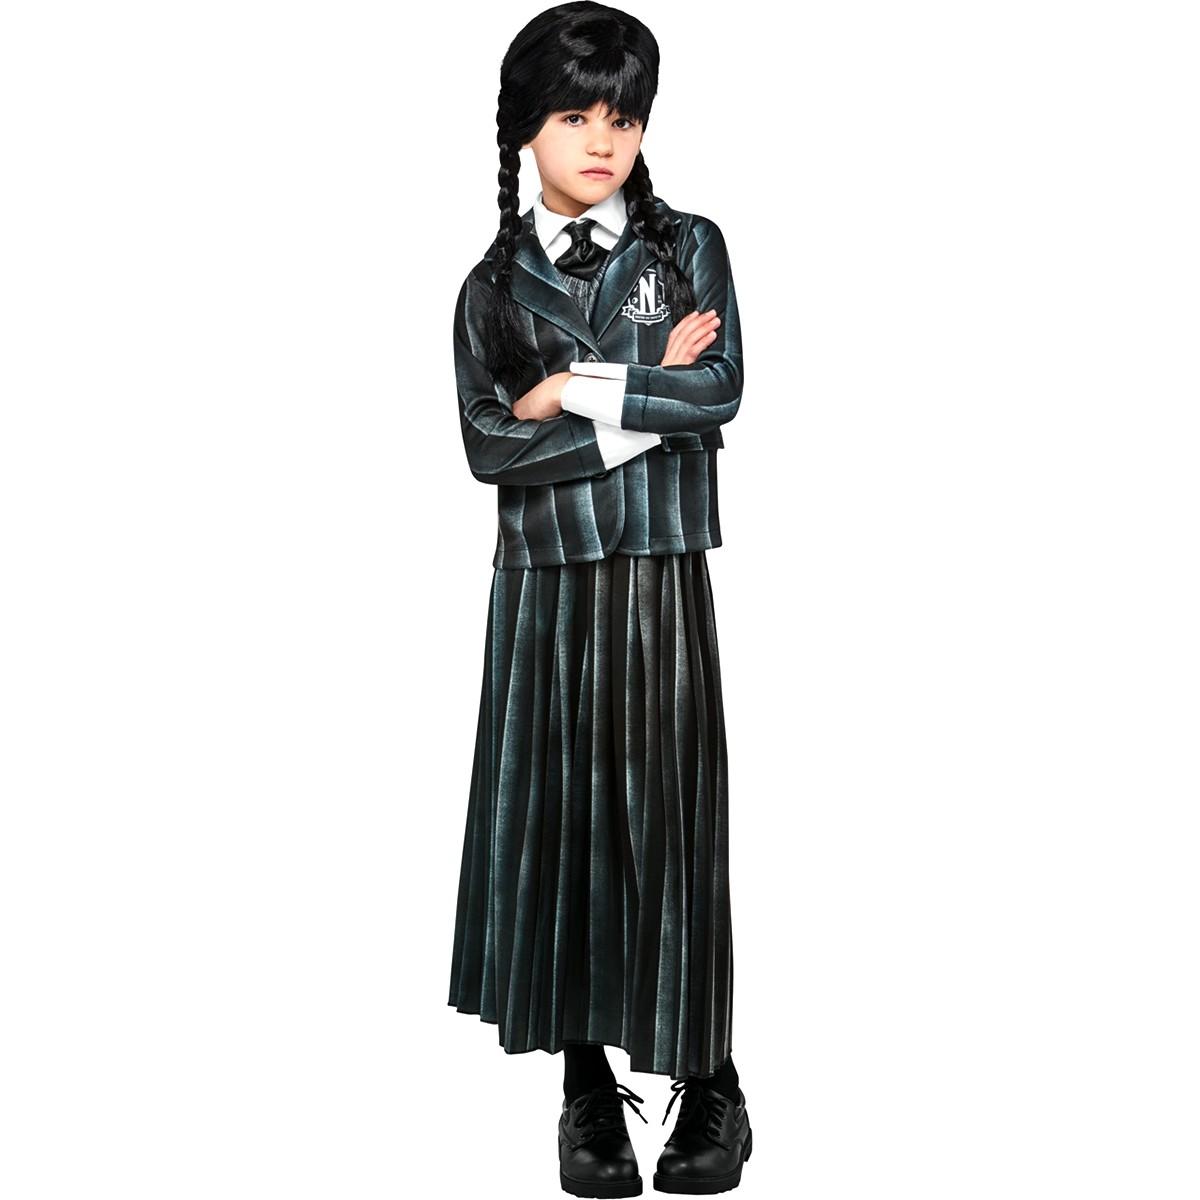 Costume Mercoledì Addams - Acquista Online su